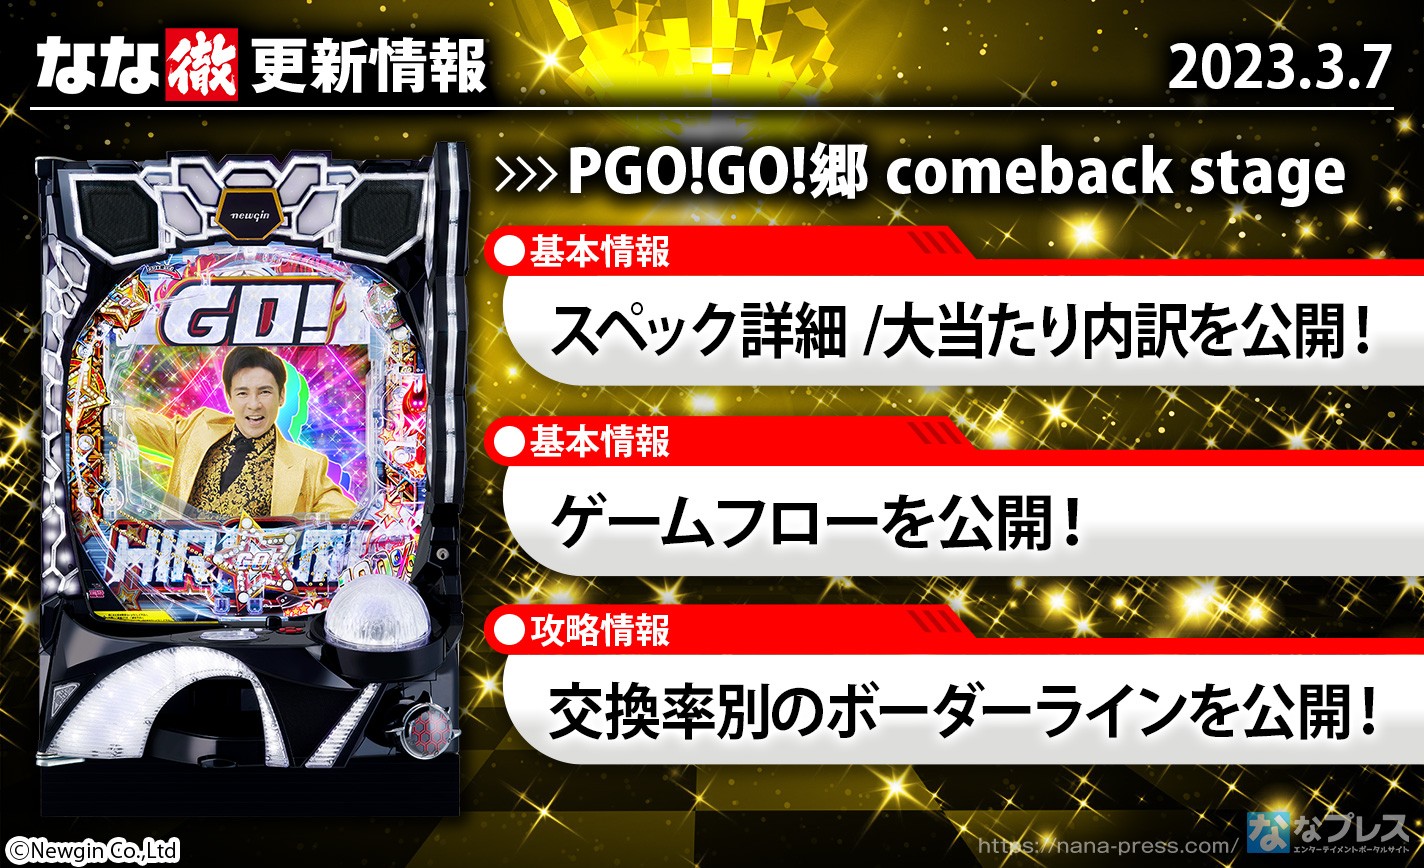 【PGO!GO!郷 Comeback Stage】機種ページを公開しました。【3月7日解析情報更新】 eyecatch-image